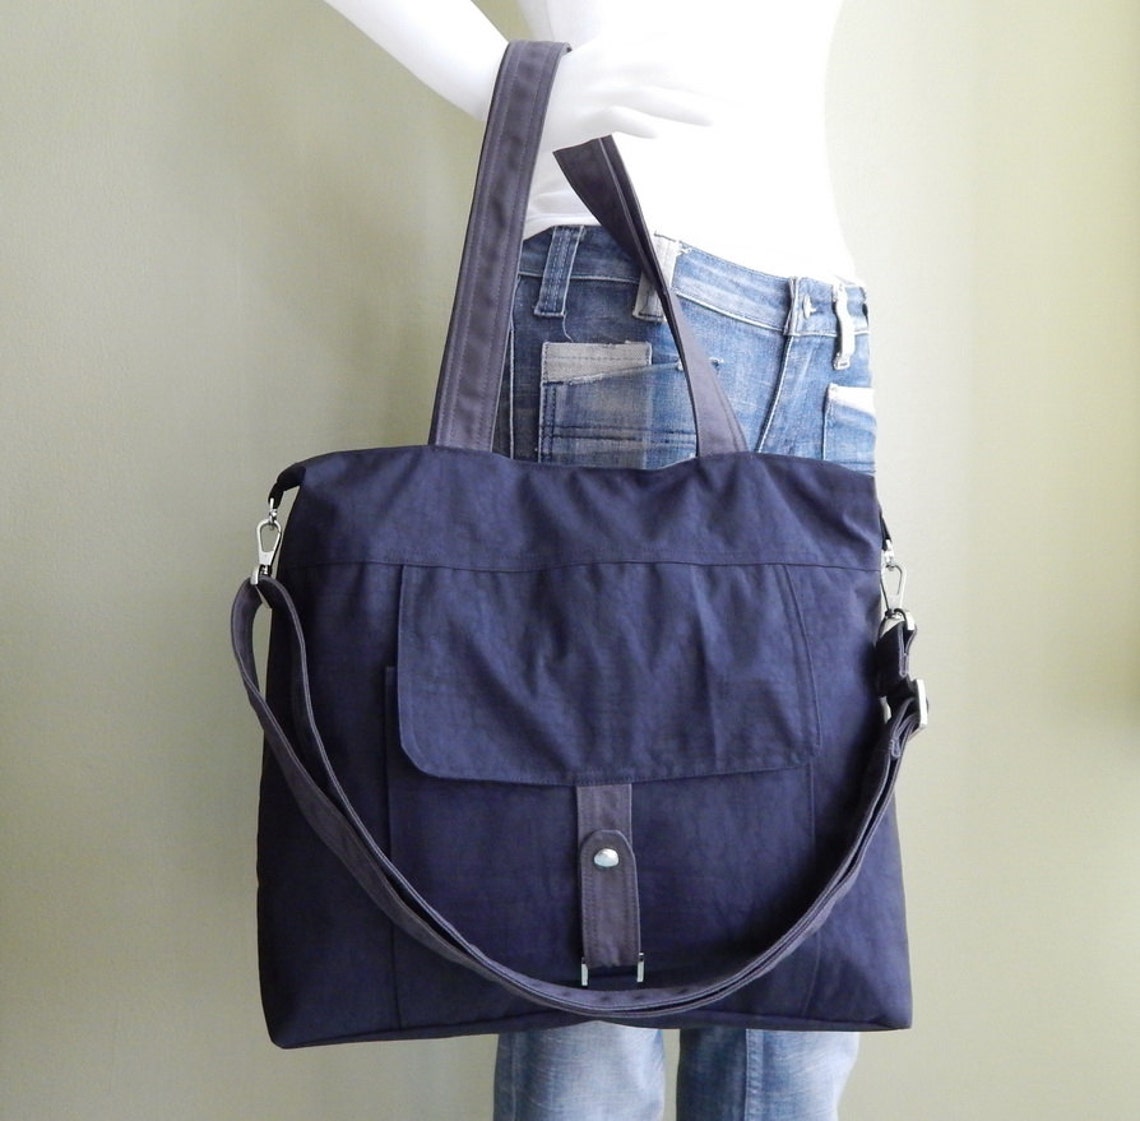 Water-resistant Bag in Black Messenger Bag Tote Crossbody | Etsy